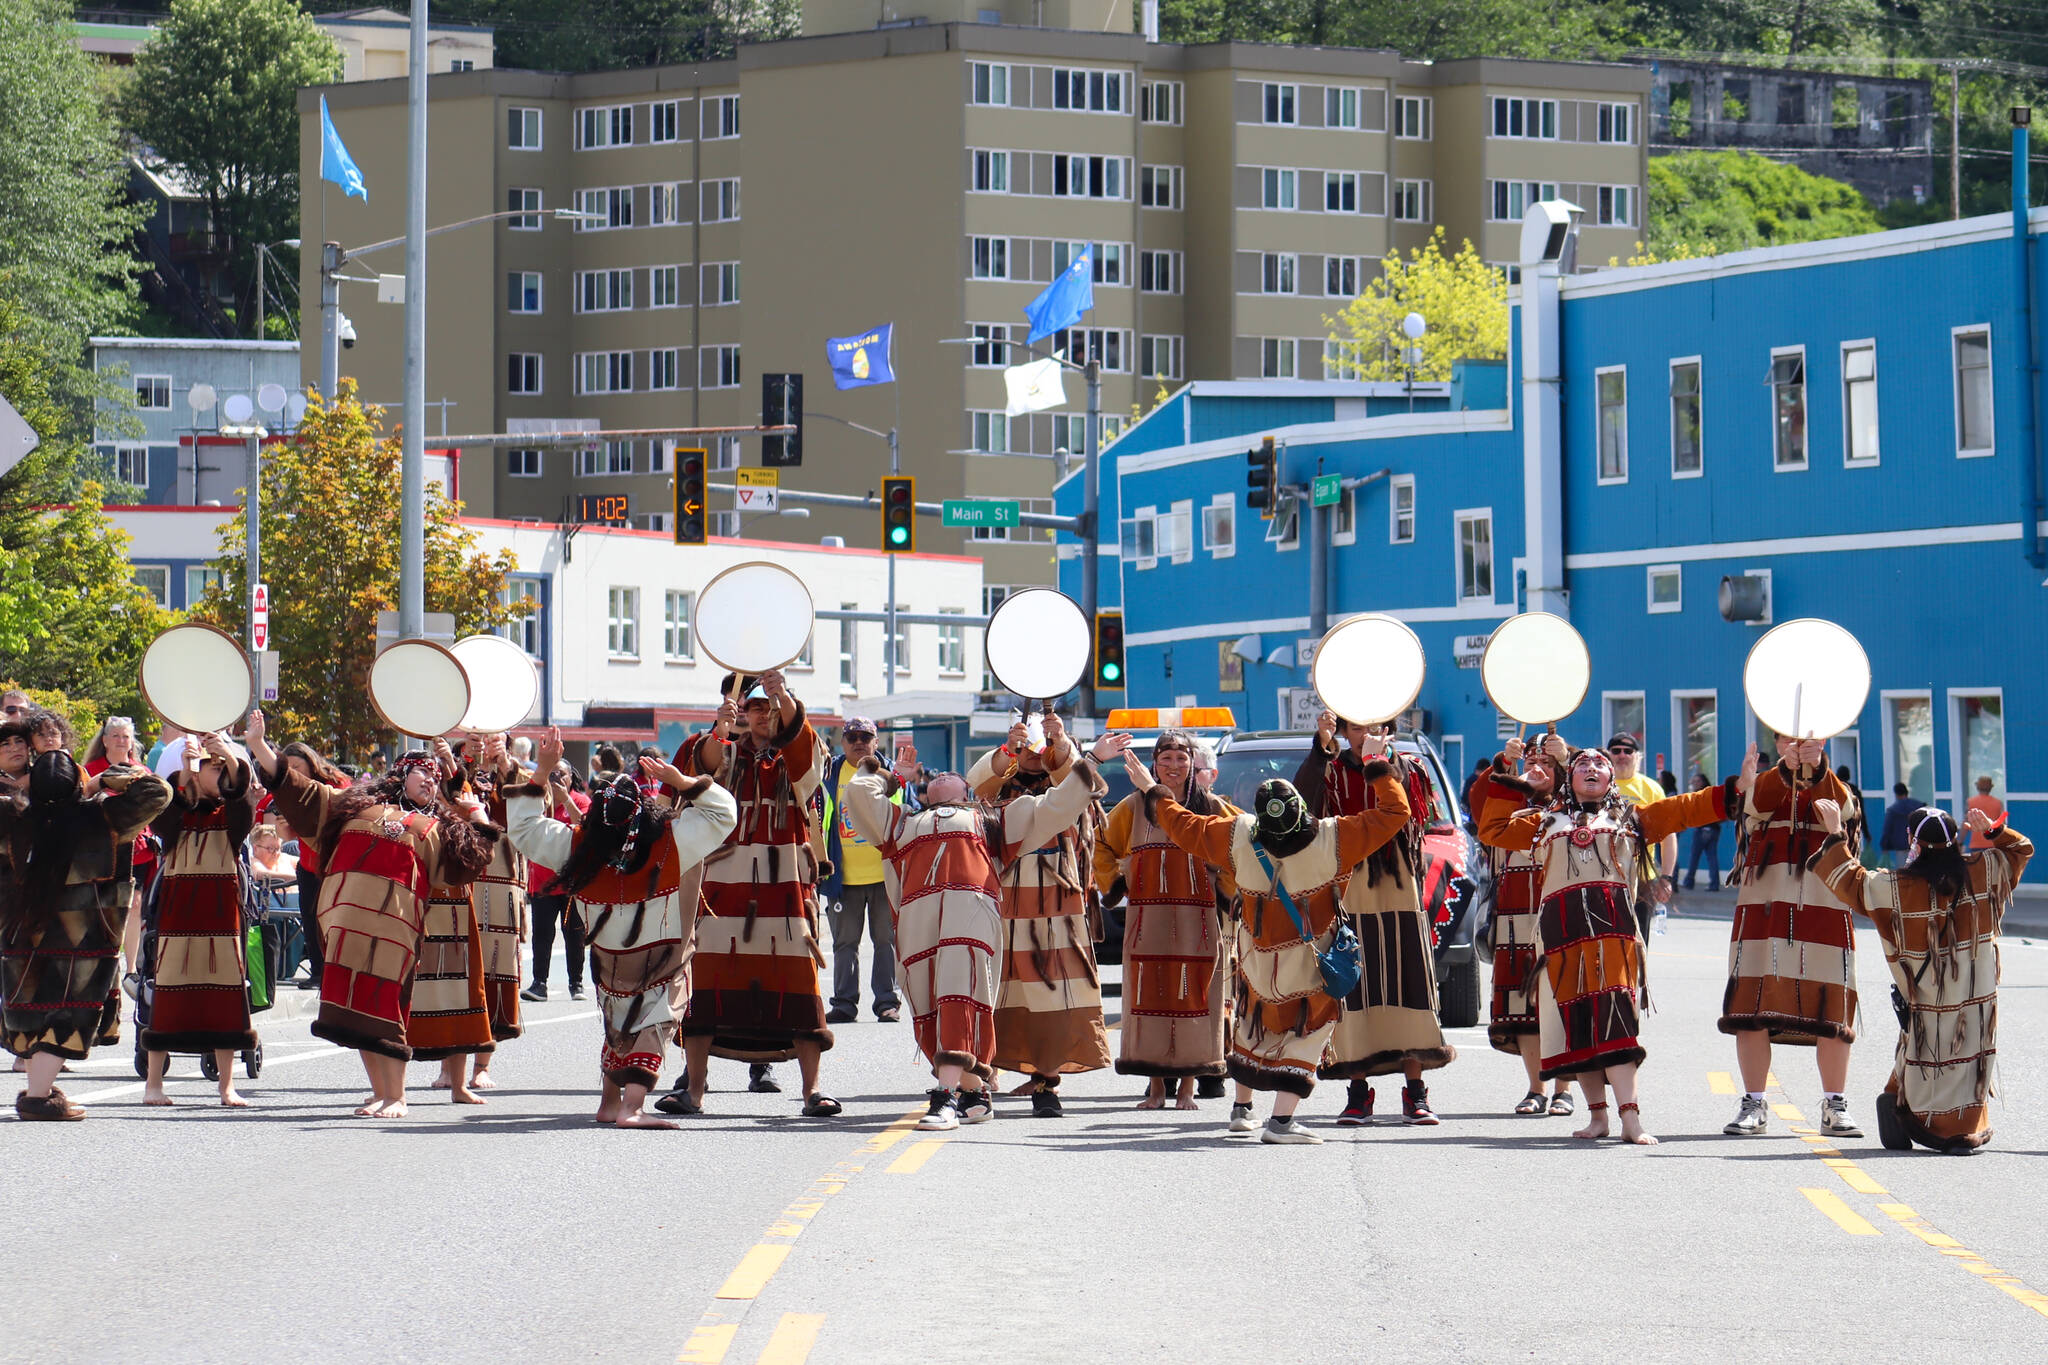 Atx̂am Taliĝisniikangís, also known as the Atka Dancers, ended the Celebration parade on Saturday morning. (Jasz Garrett / Juneau Empire)